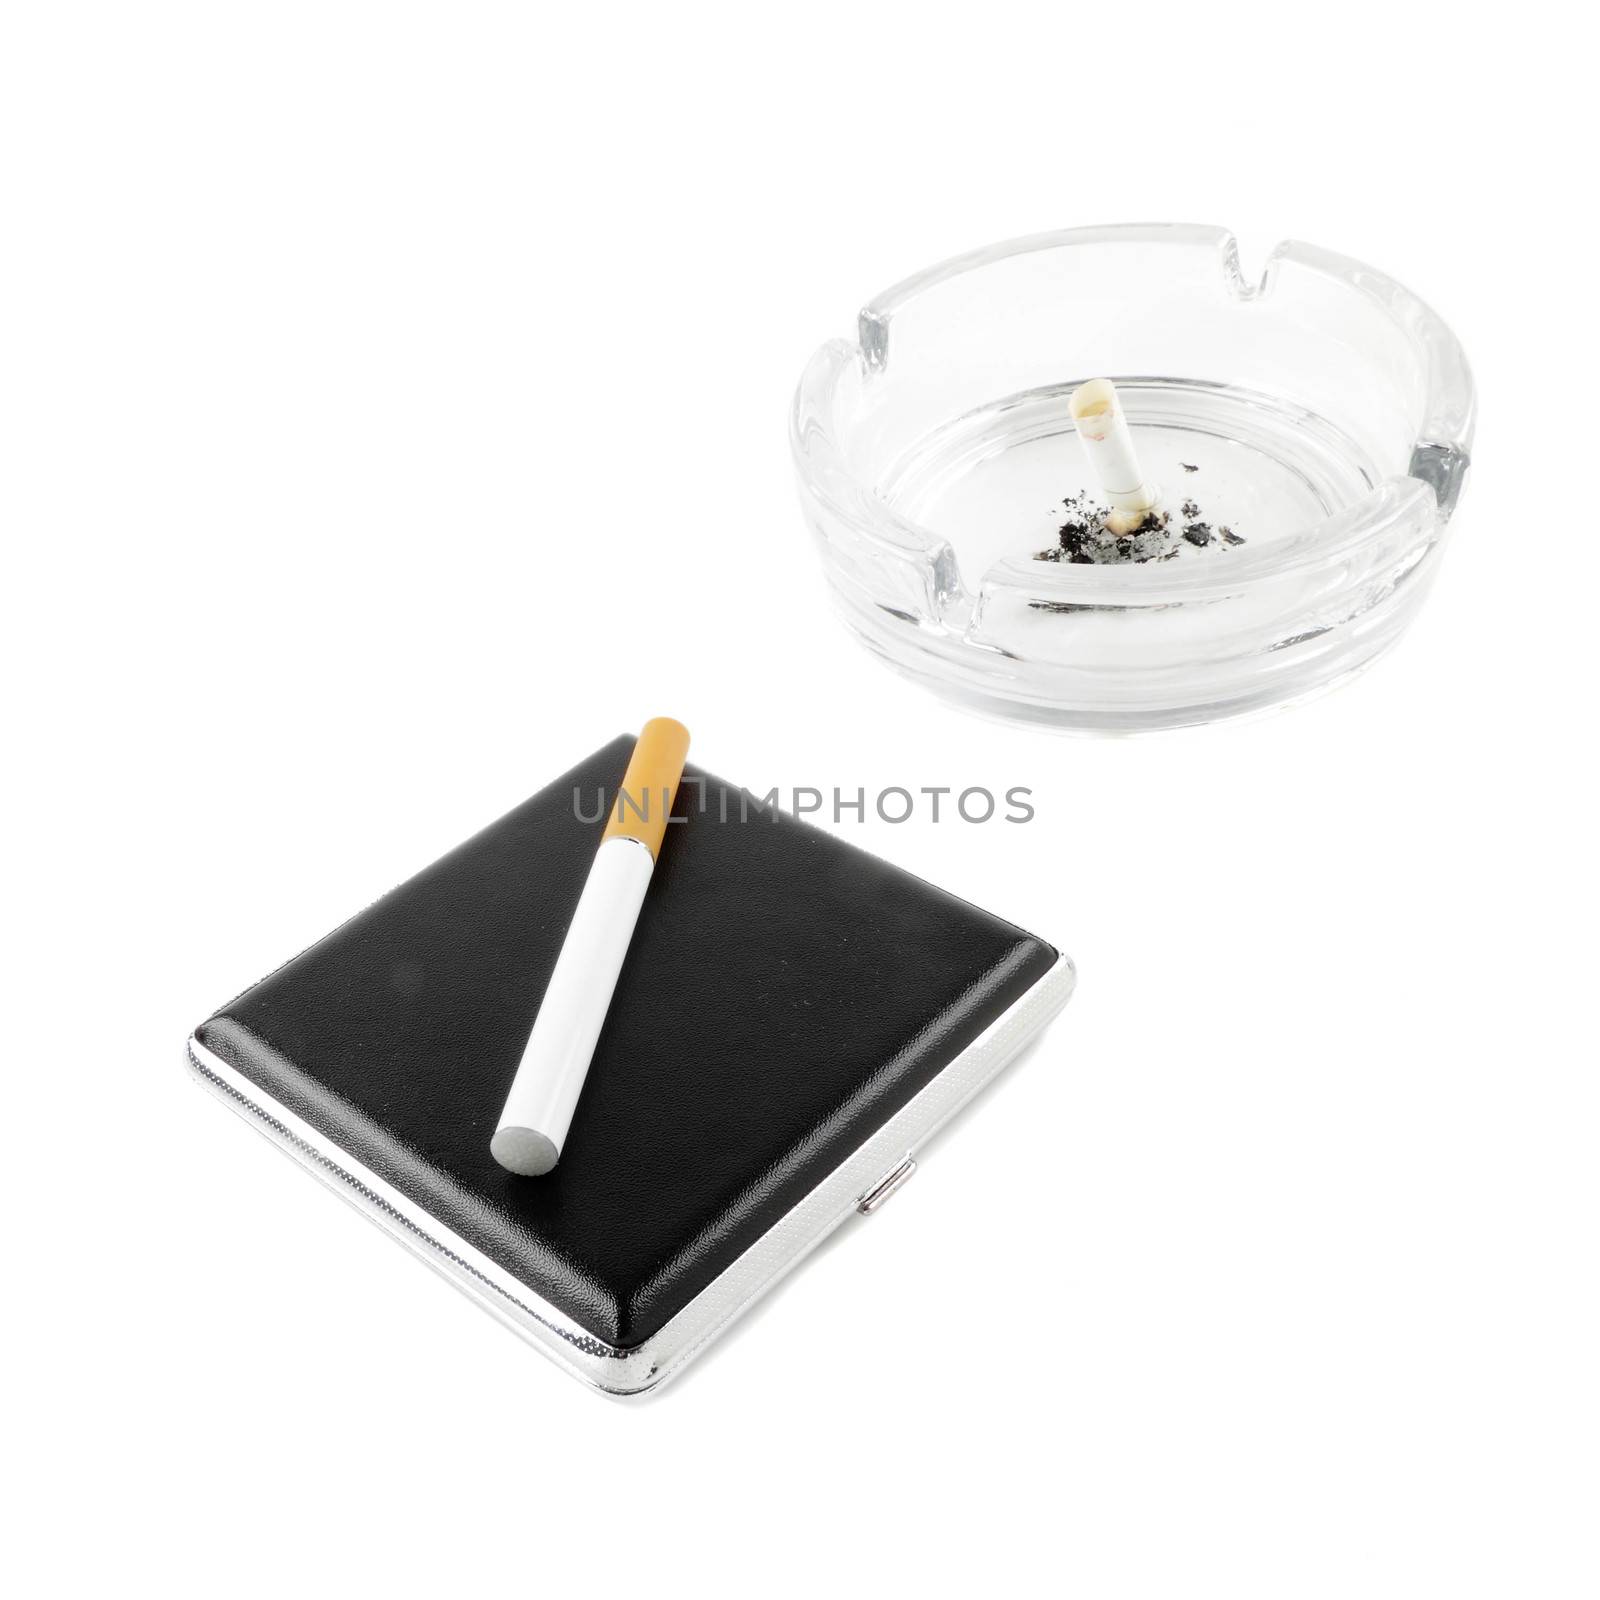 cigarette concept by shutswis